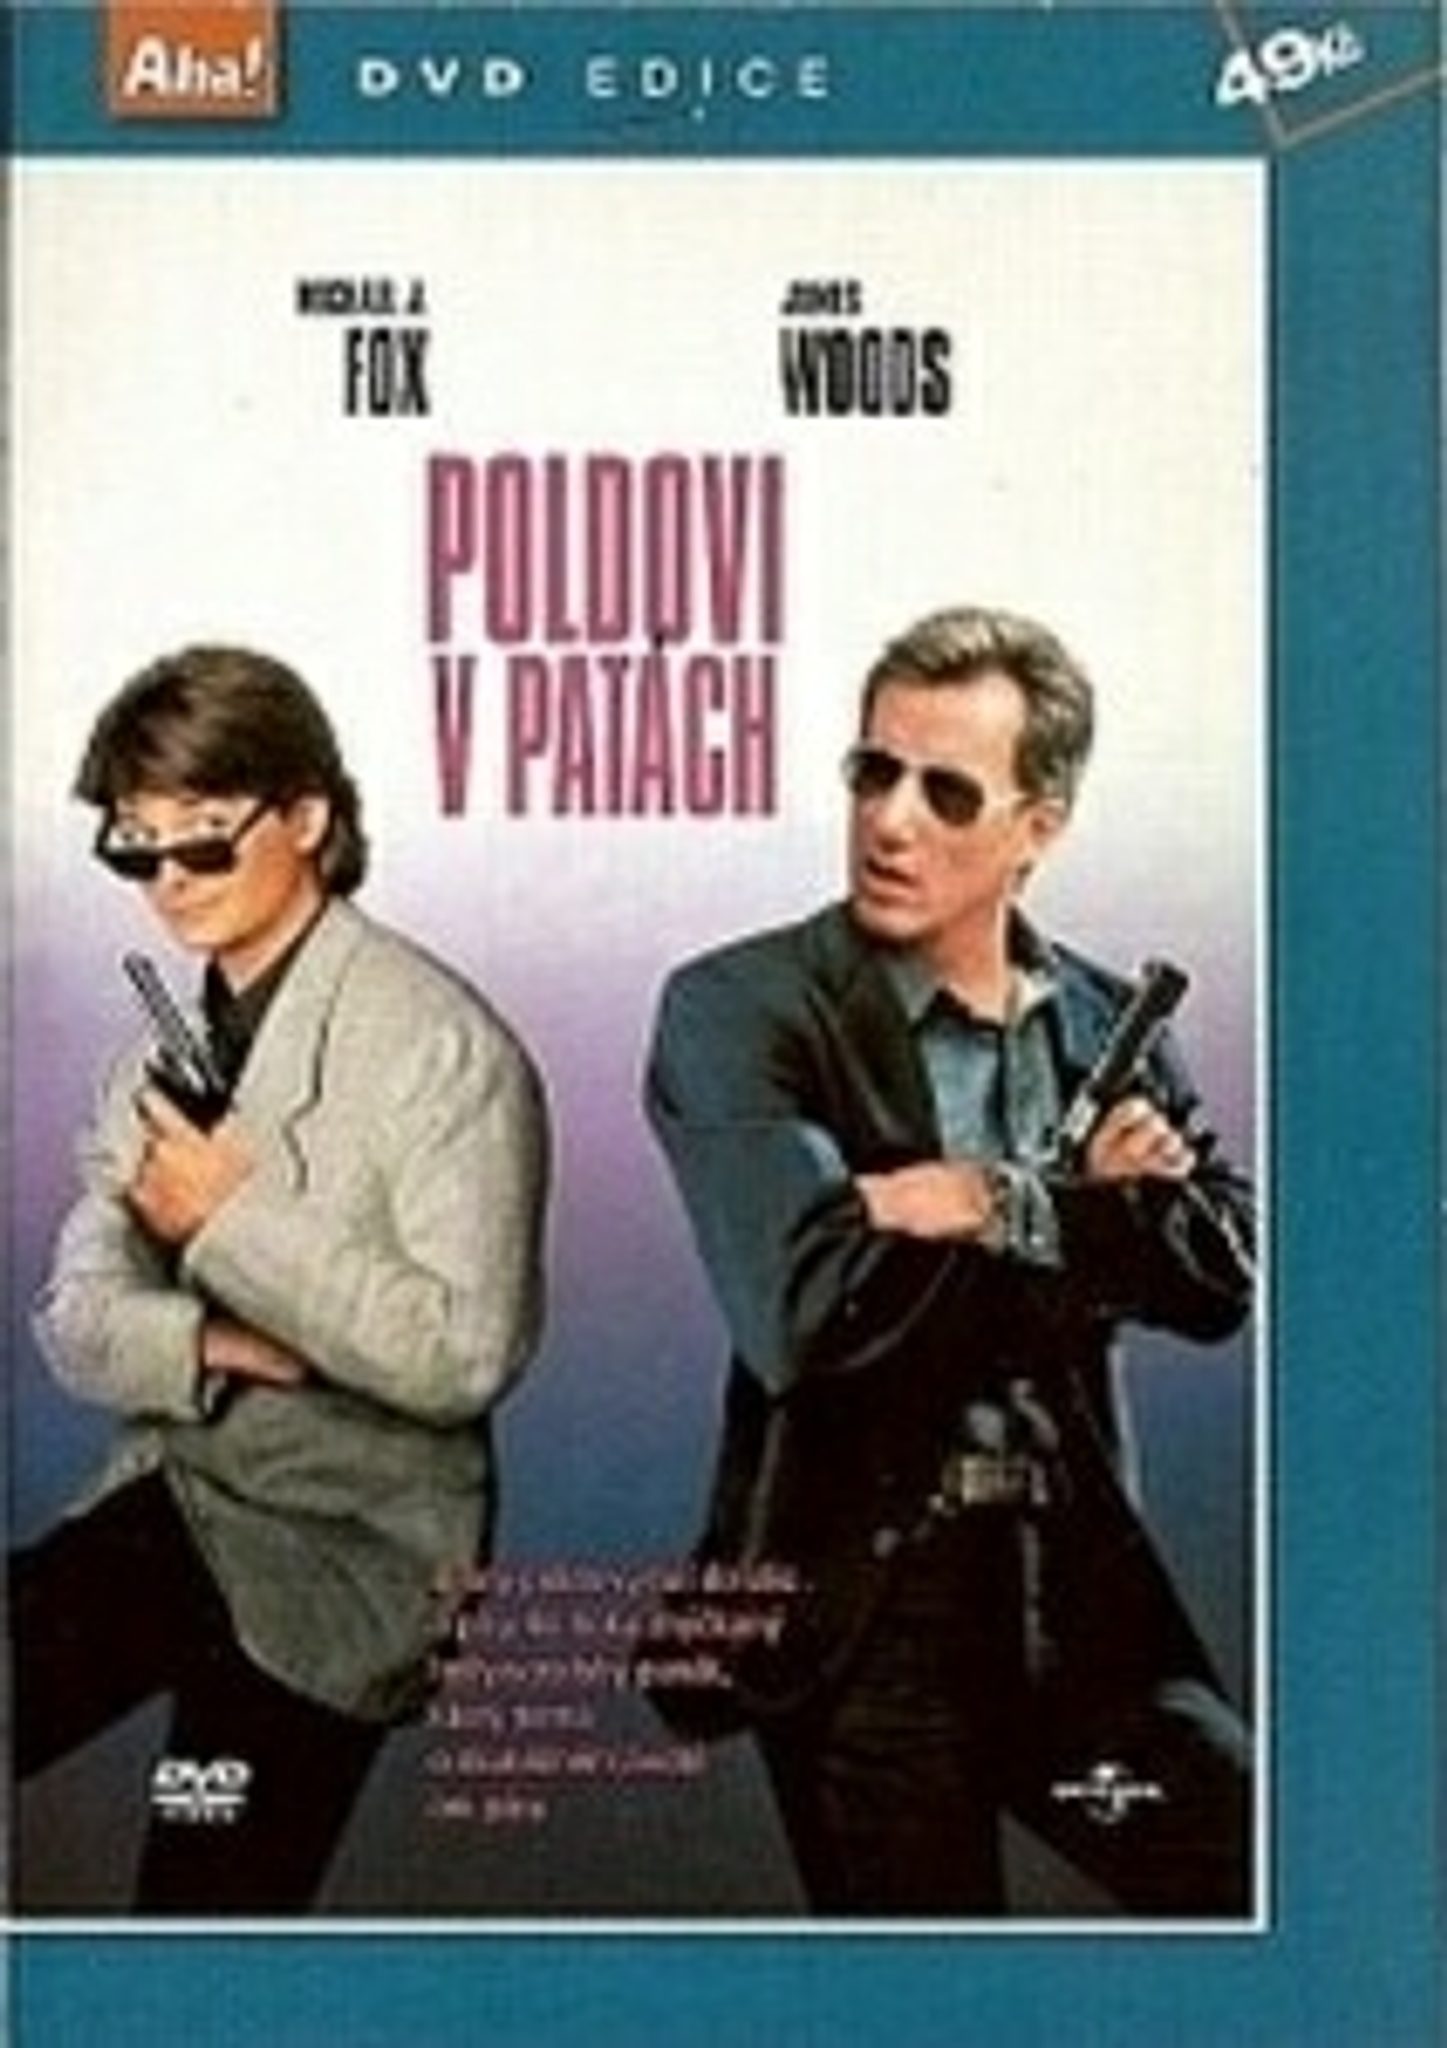 DVD Poldovi v patch